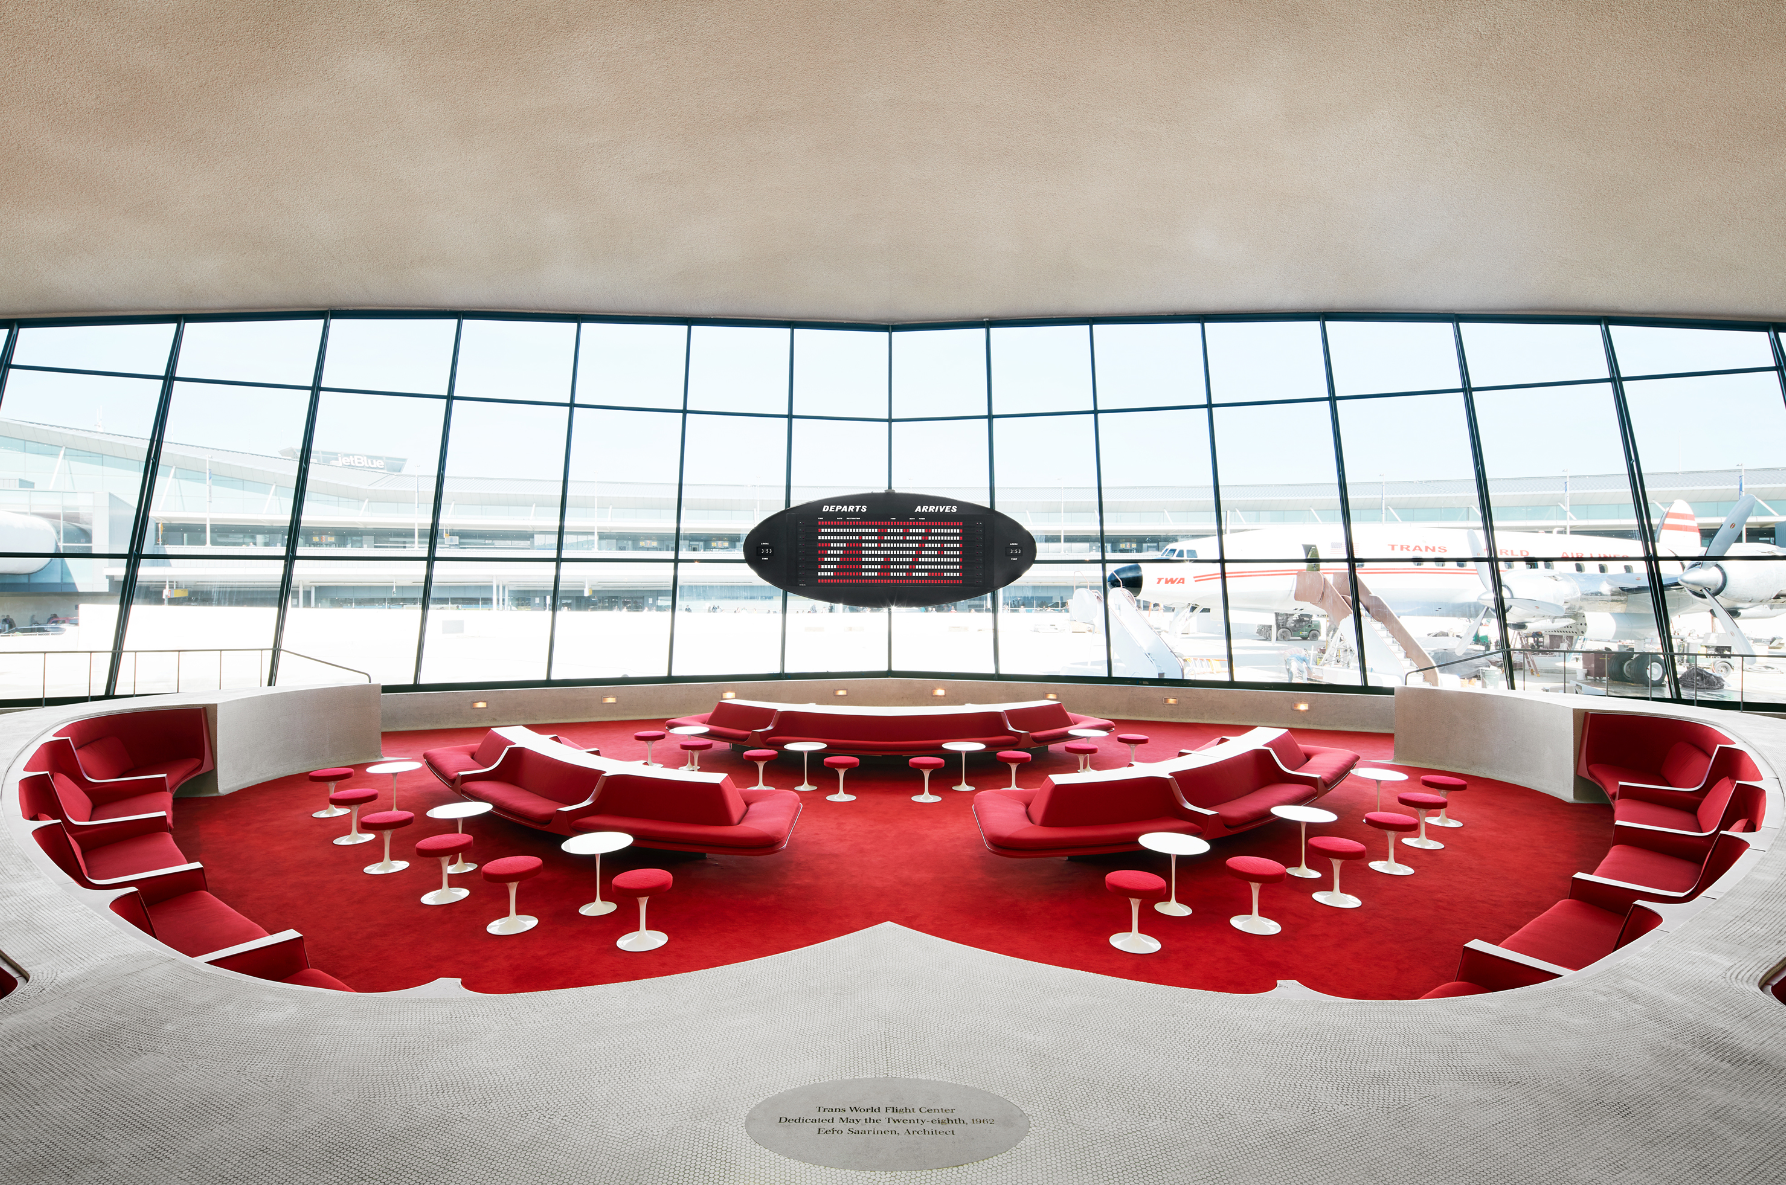 Long Before Louis Vuitton's Cruise 2020 Show, the TWA Terminal Was